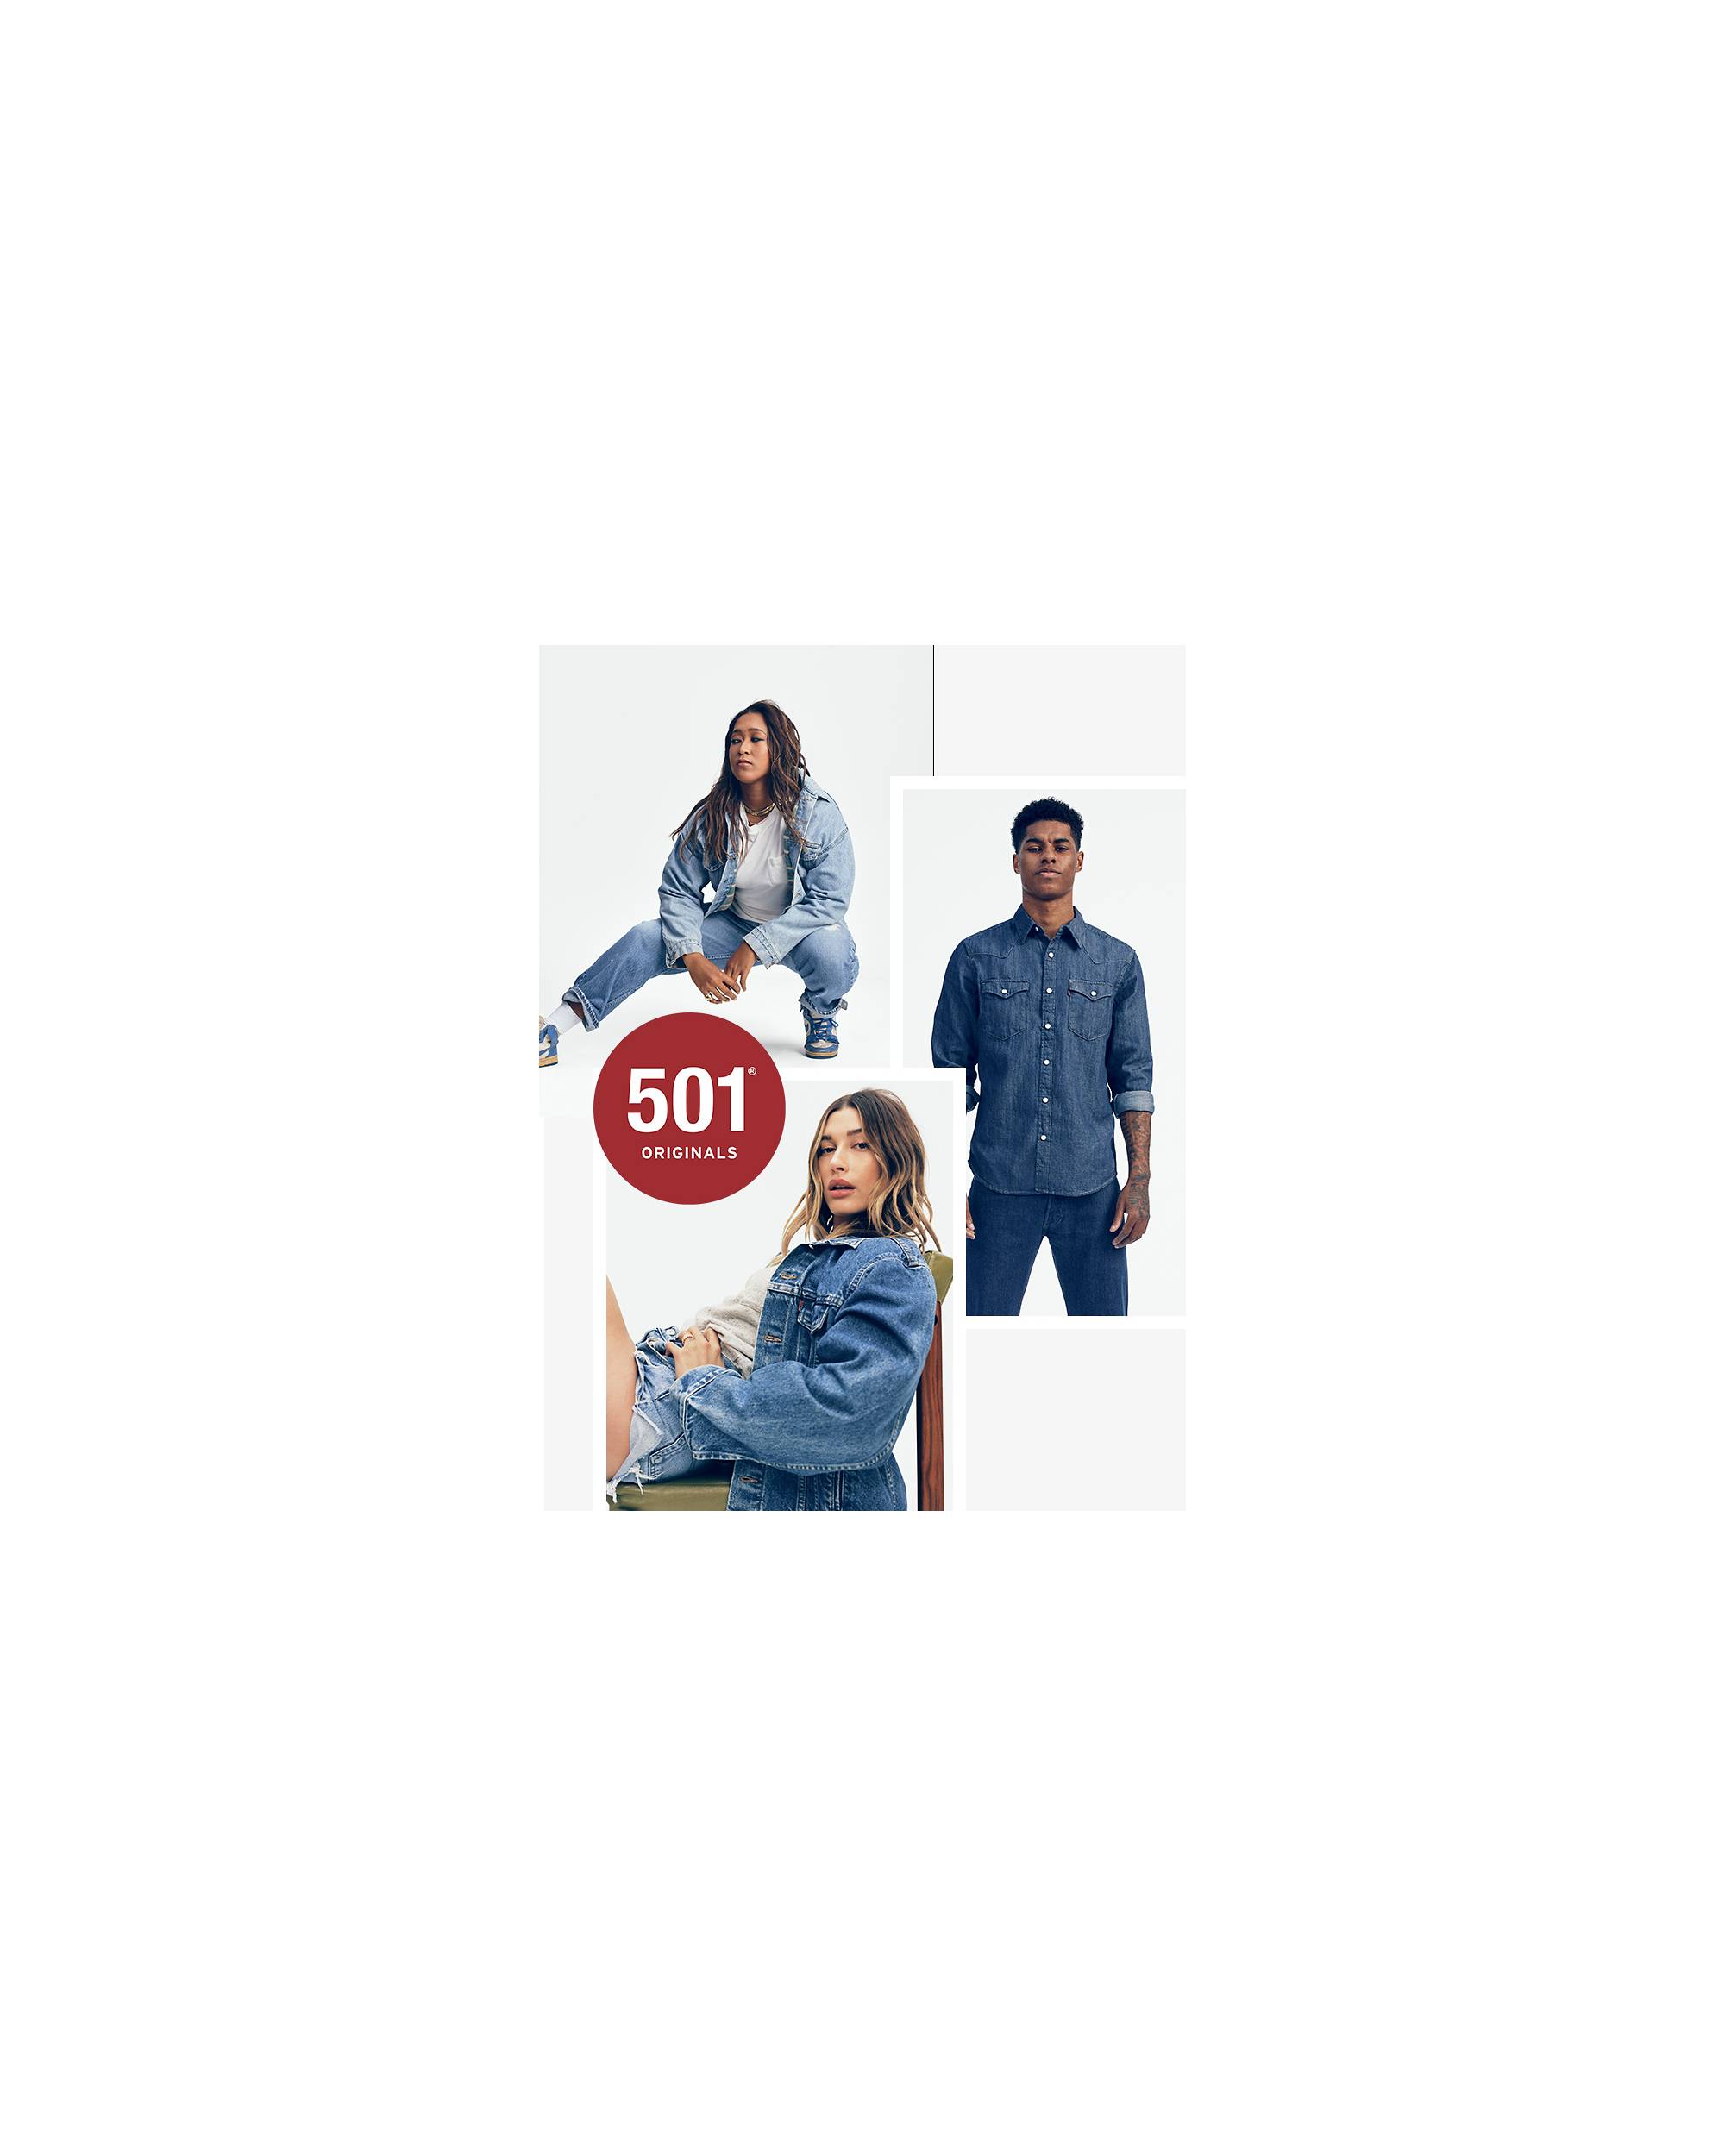 Shai Gilgeous-Alexander stars in Levi's 501 Originals campaign 